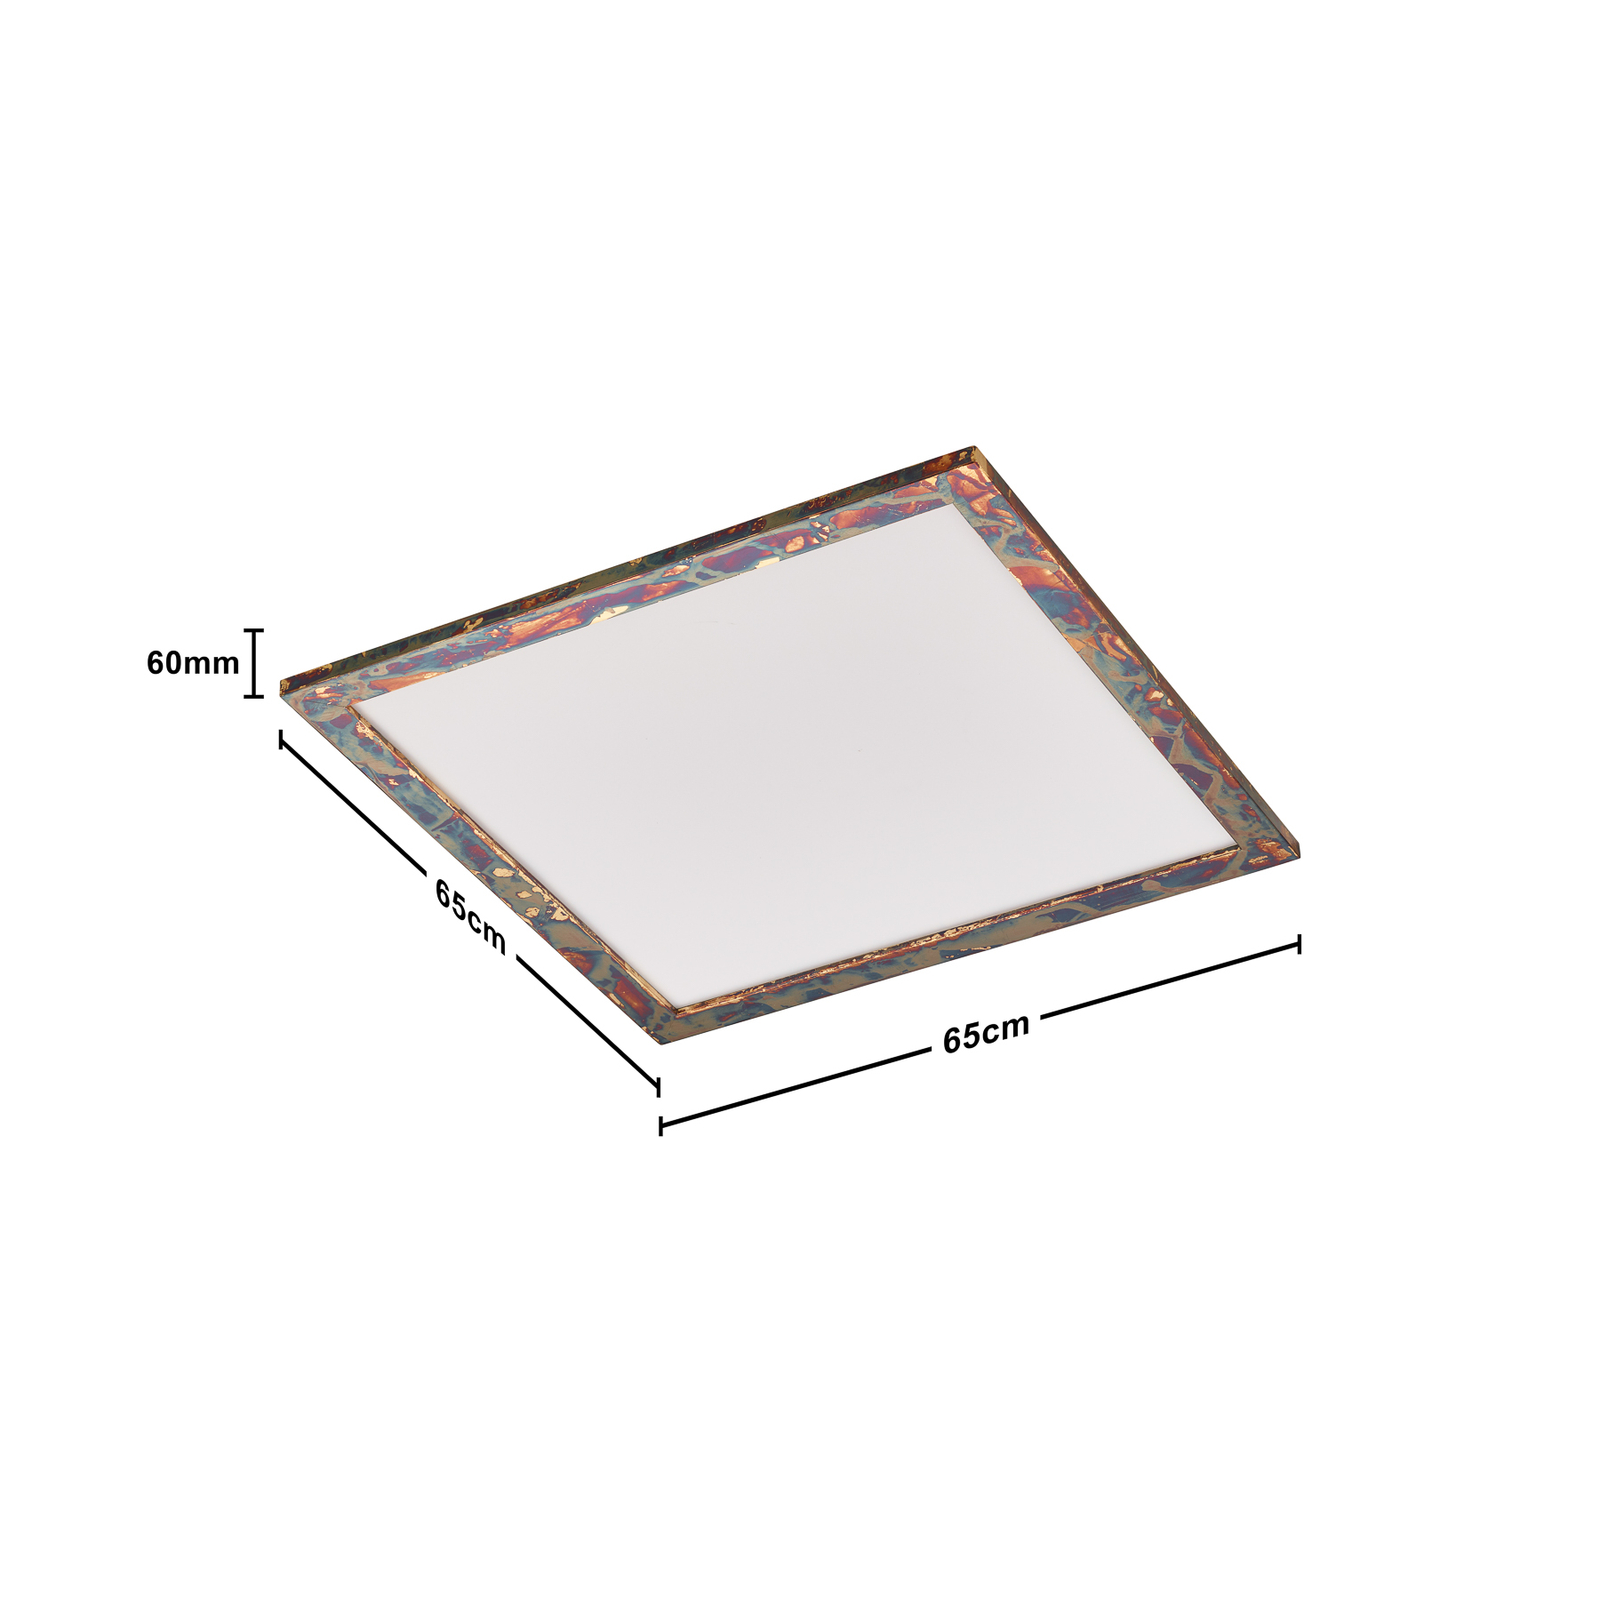 Quitani Aurinor LED panel, aranyszínű, 68 cm